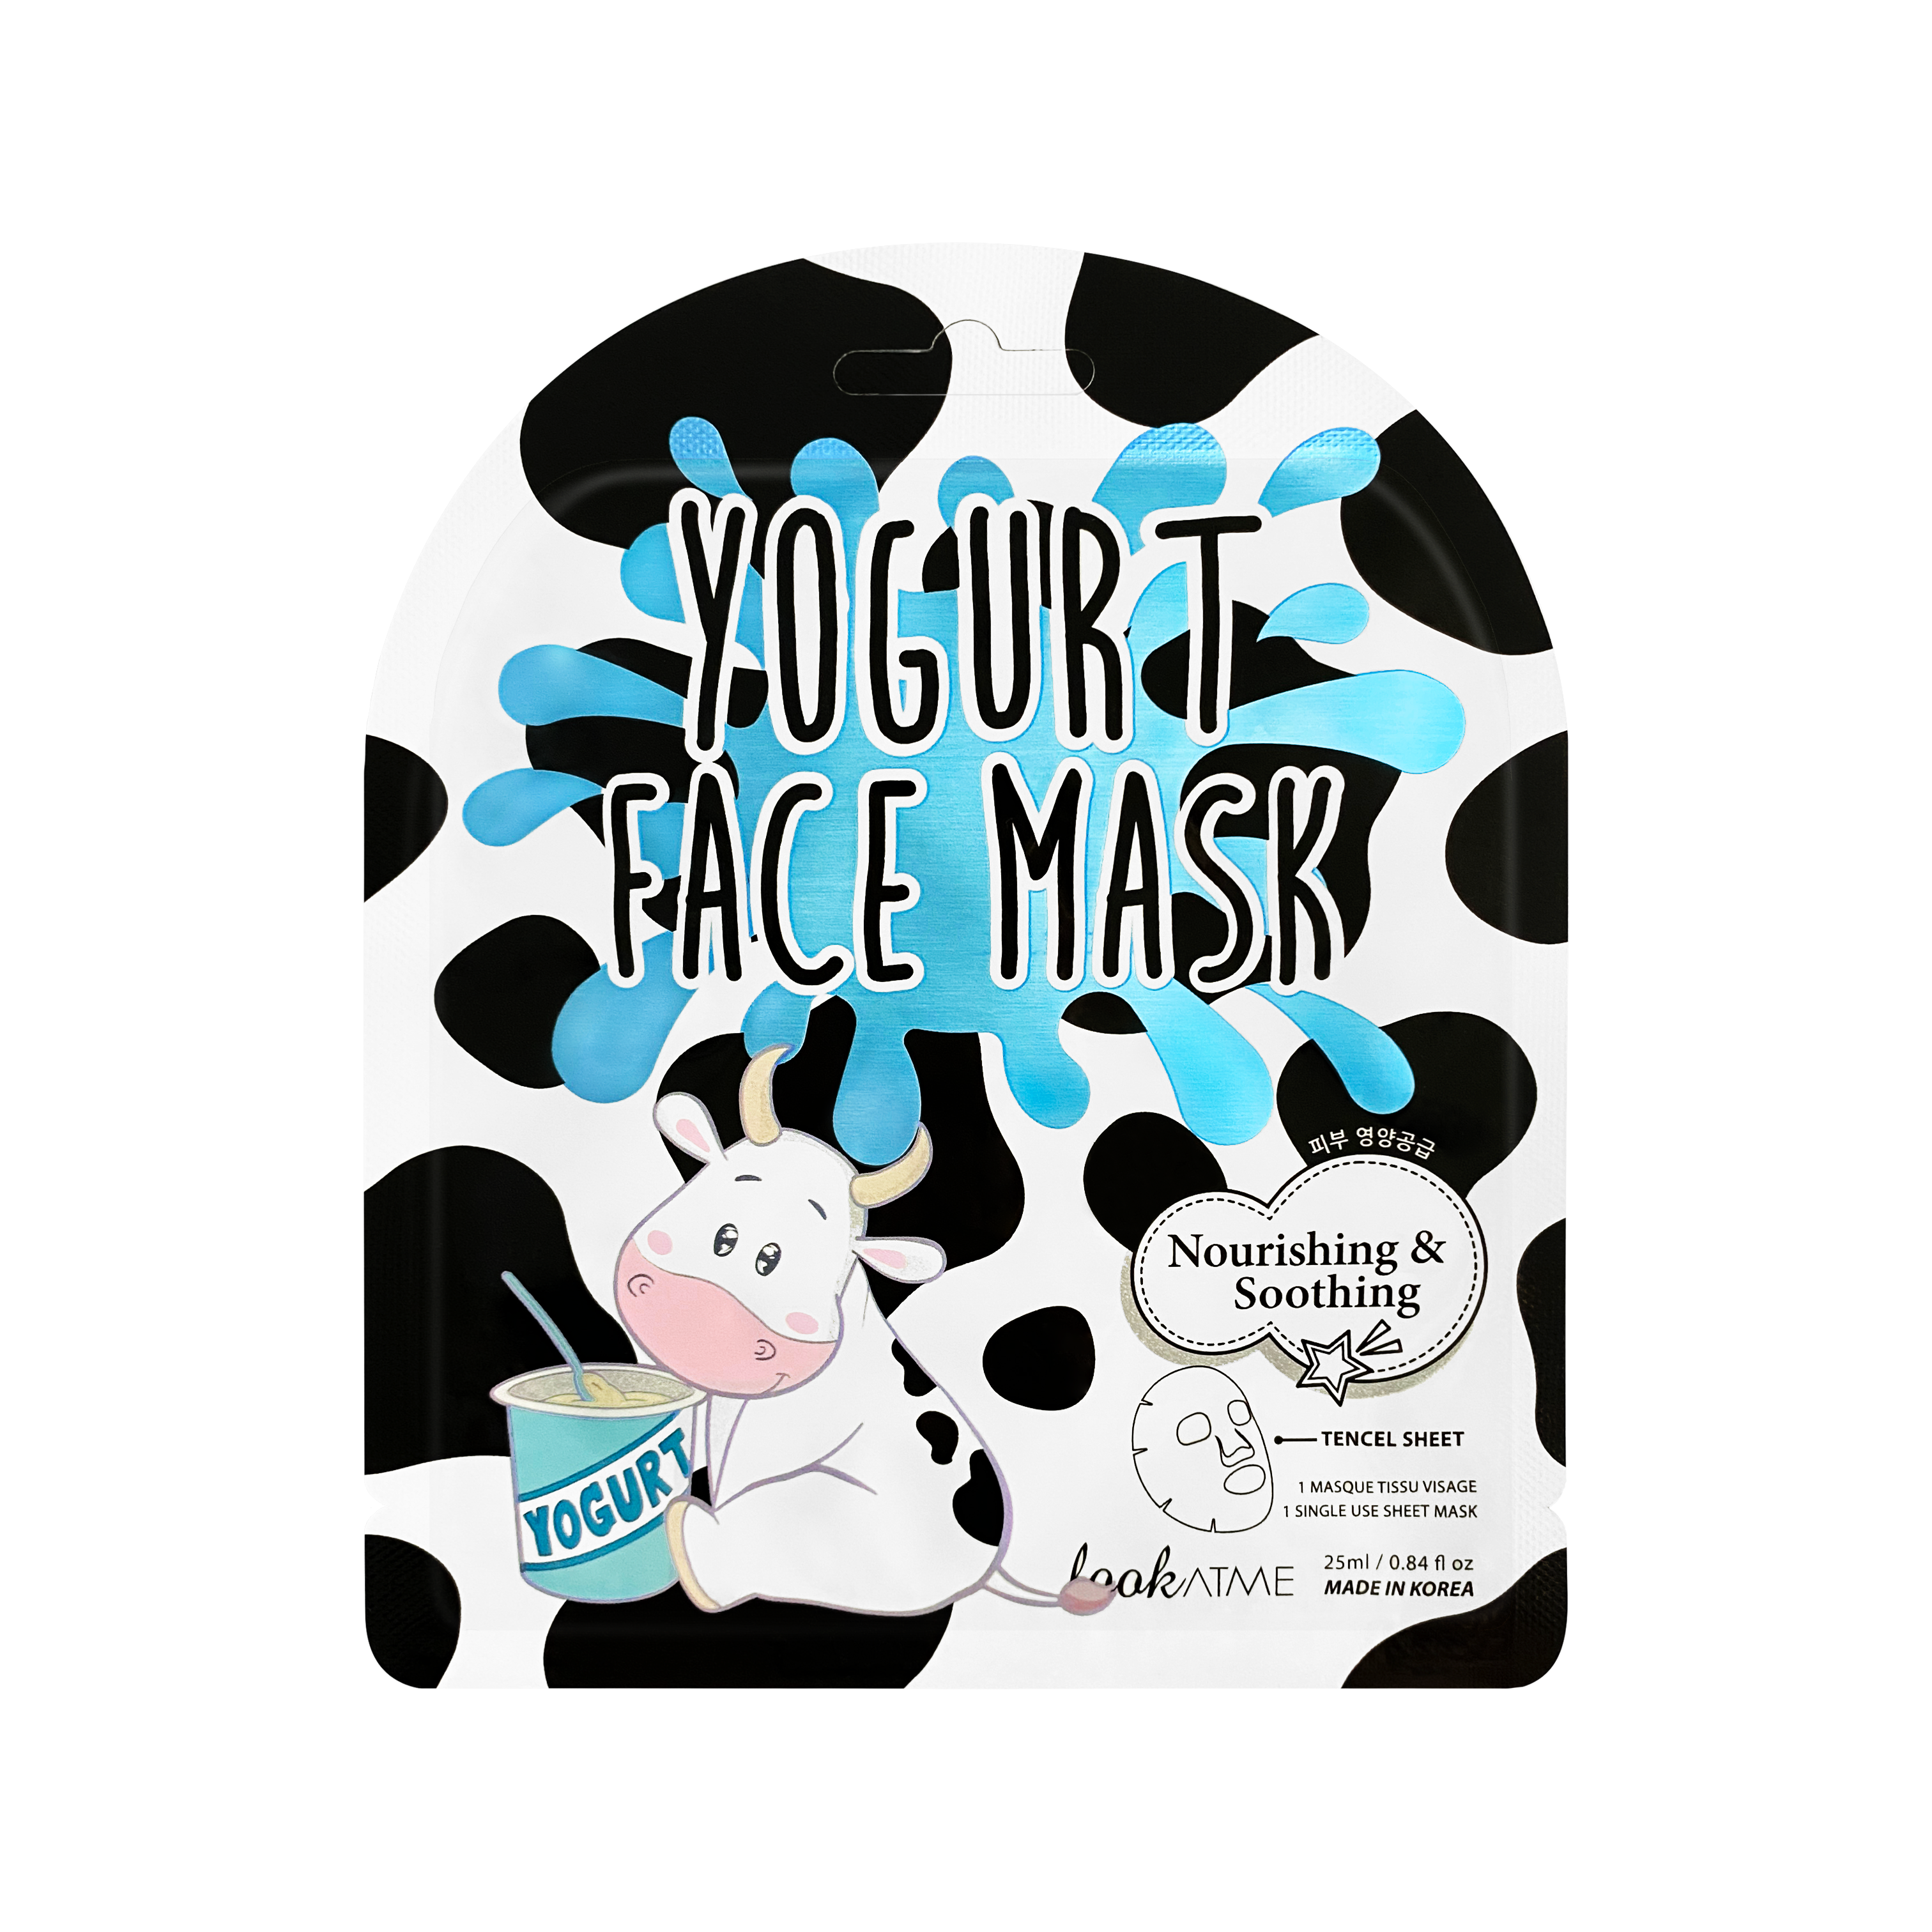 lookatme yogurt face mask